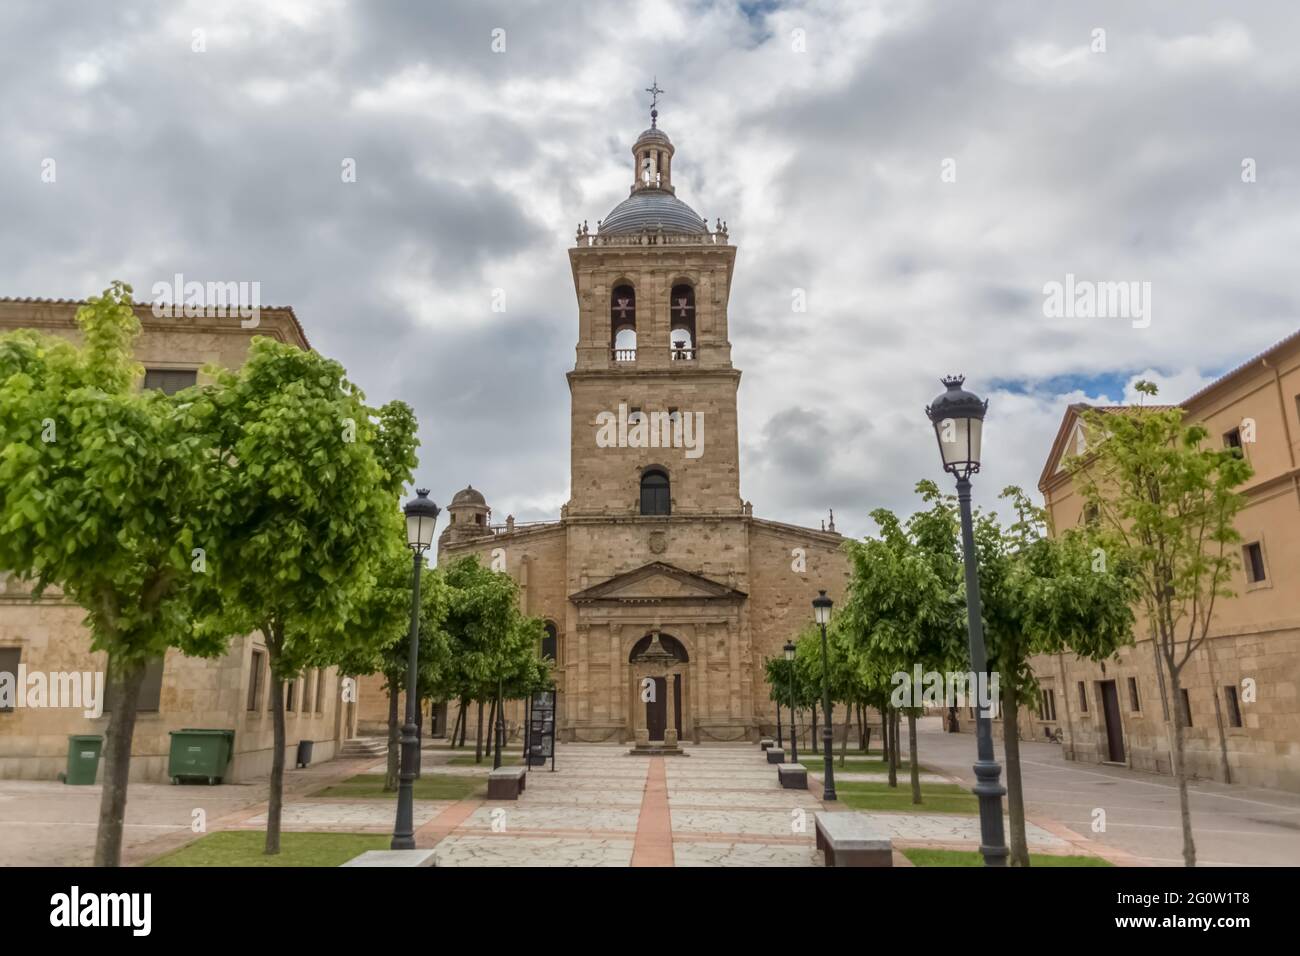 Cuidad Rodrigo / Spain - 05 13 2021: Majestic front view at the iconic spanish Romanesque architecture building at the Catedral Santa María de Ciudad Stock Photo